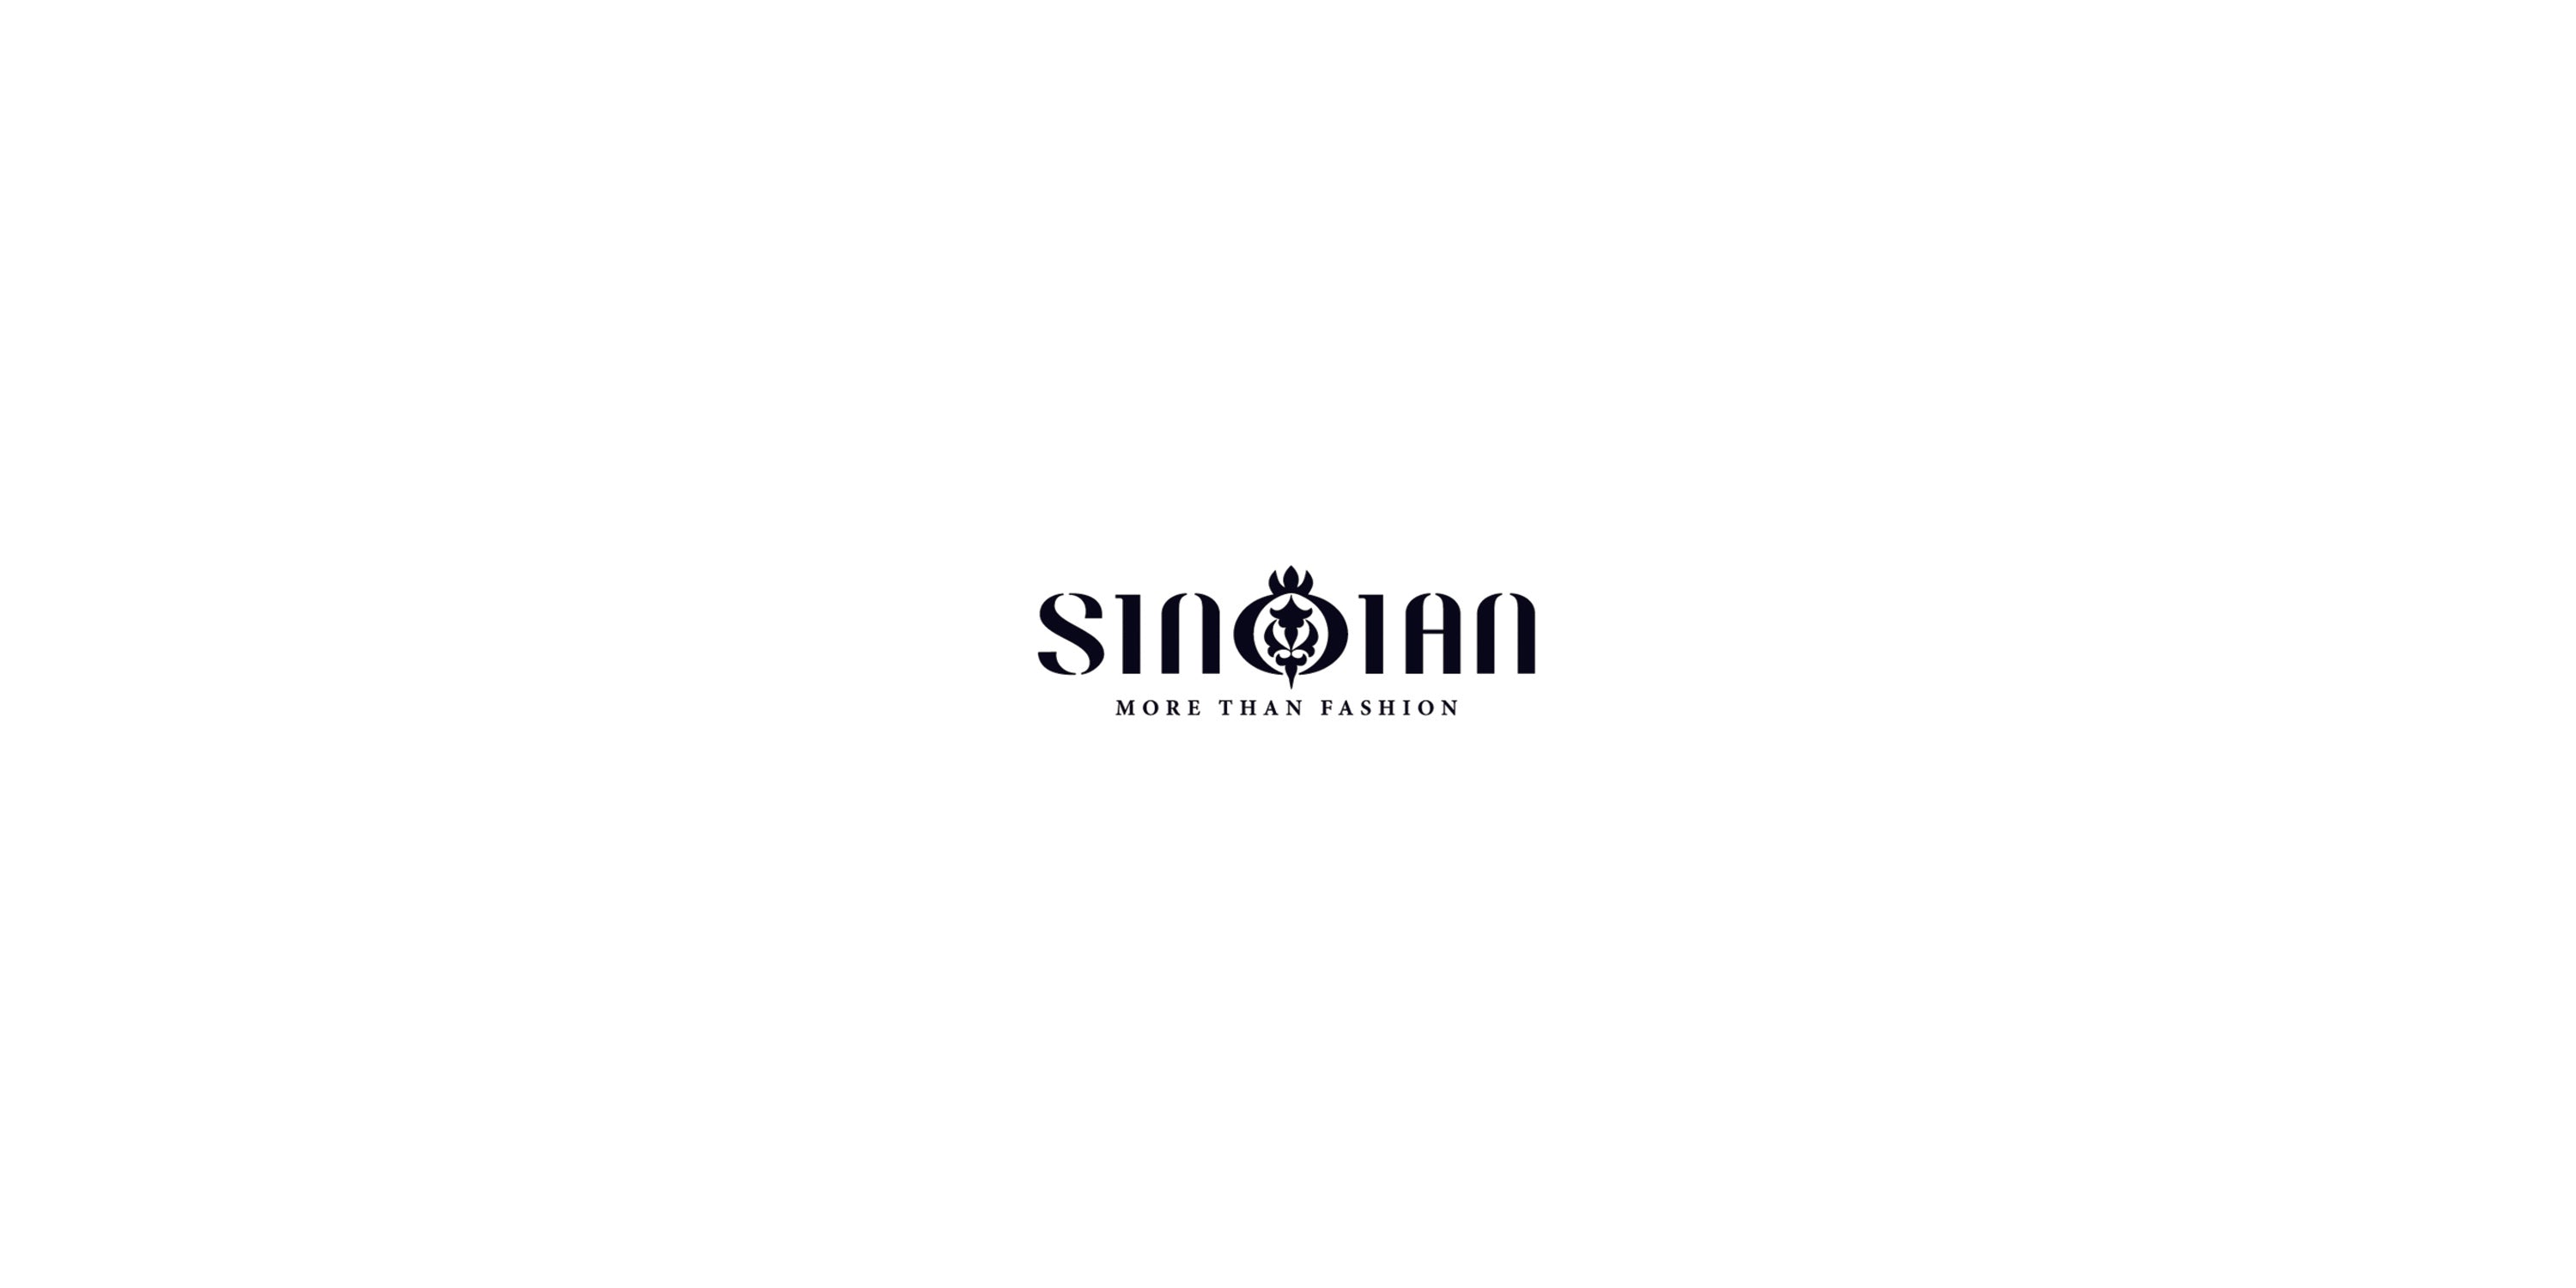 Sinoian logo